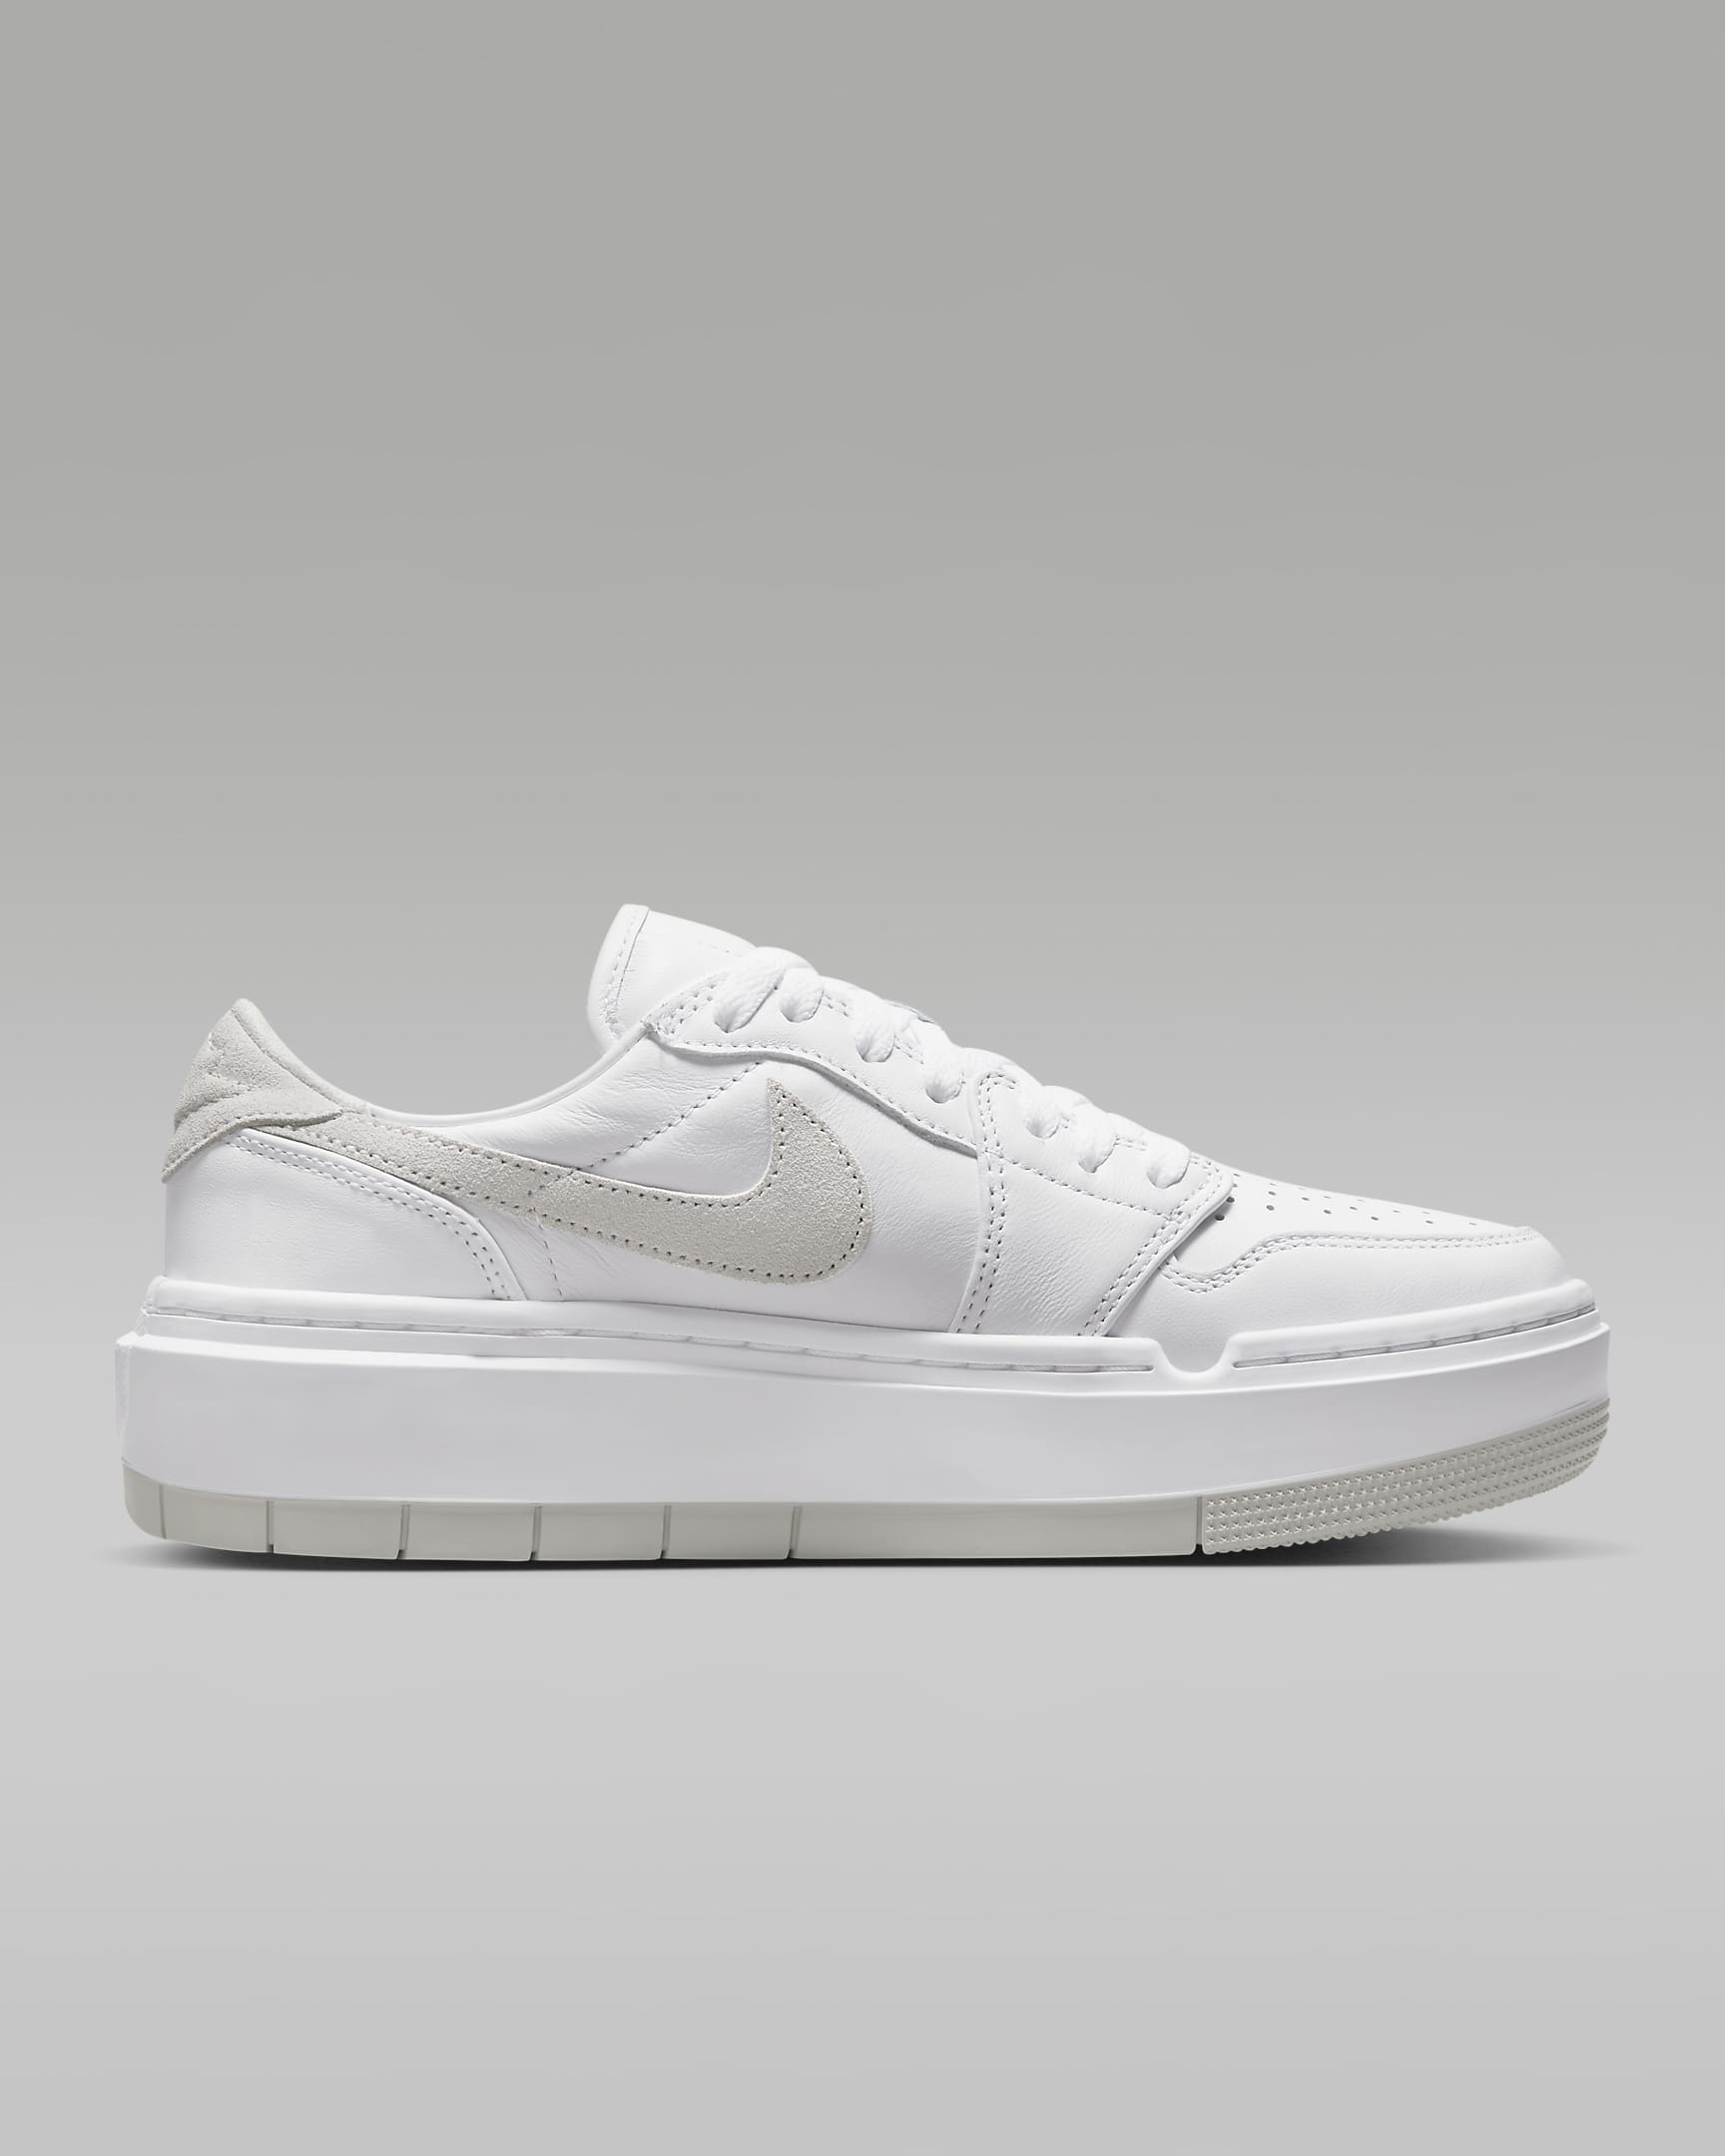 Air Jordan 1 Elevate Low Women's Shoes - White/White/Neutral Grey